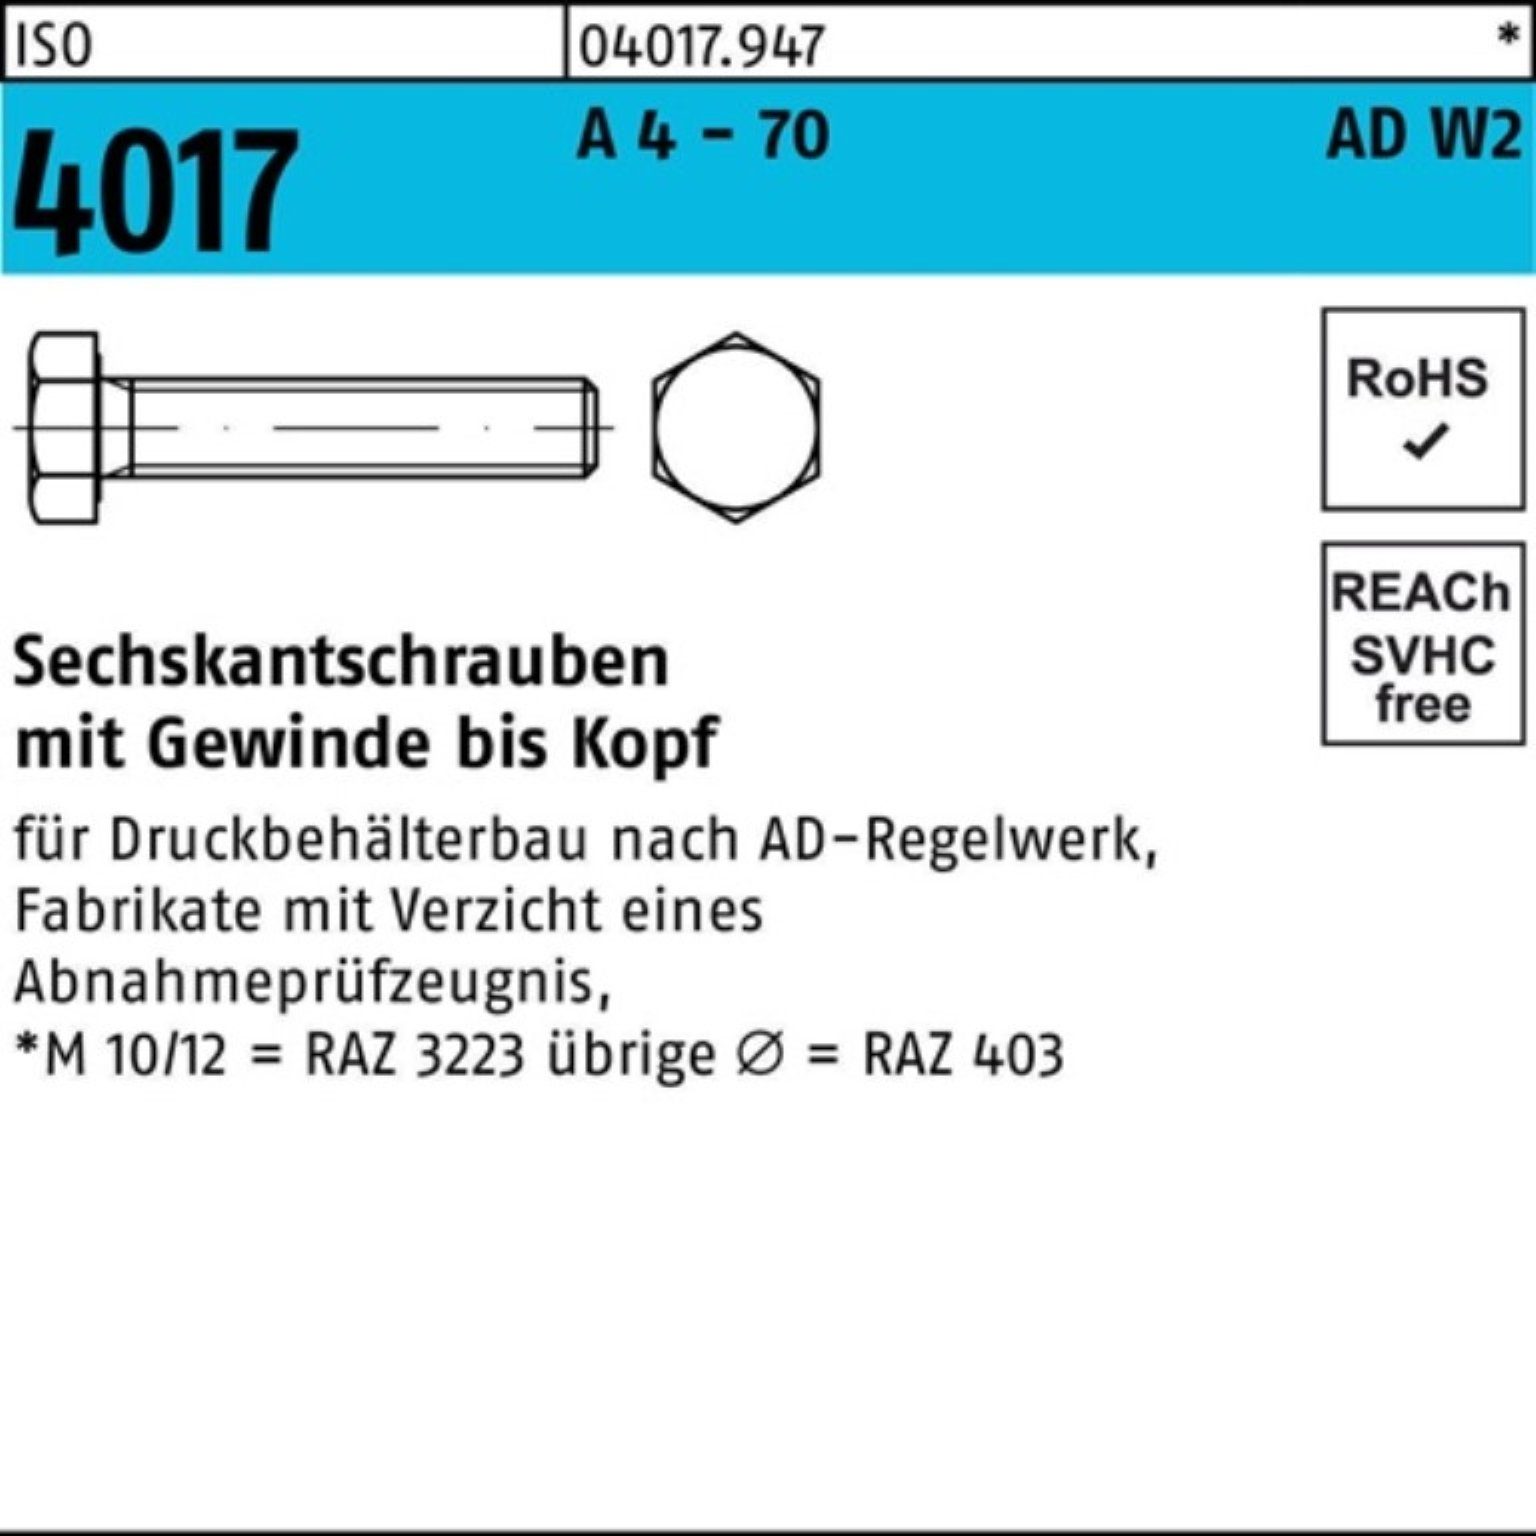 Bufab Sechskantschraube 100er Pack Sechskantschraube ISO 4017 VG M20x 40 A 4 - 70 AD-W2 25 St